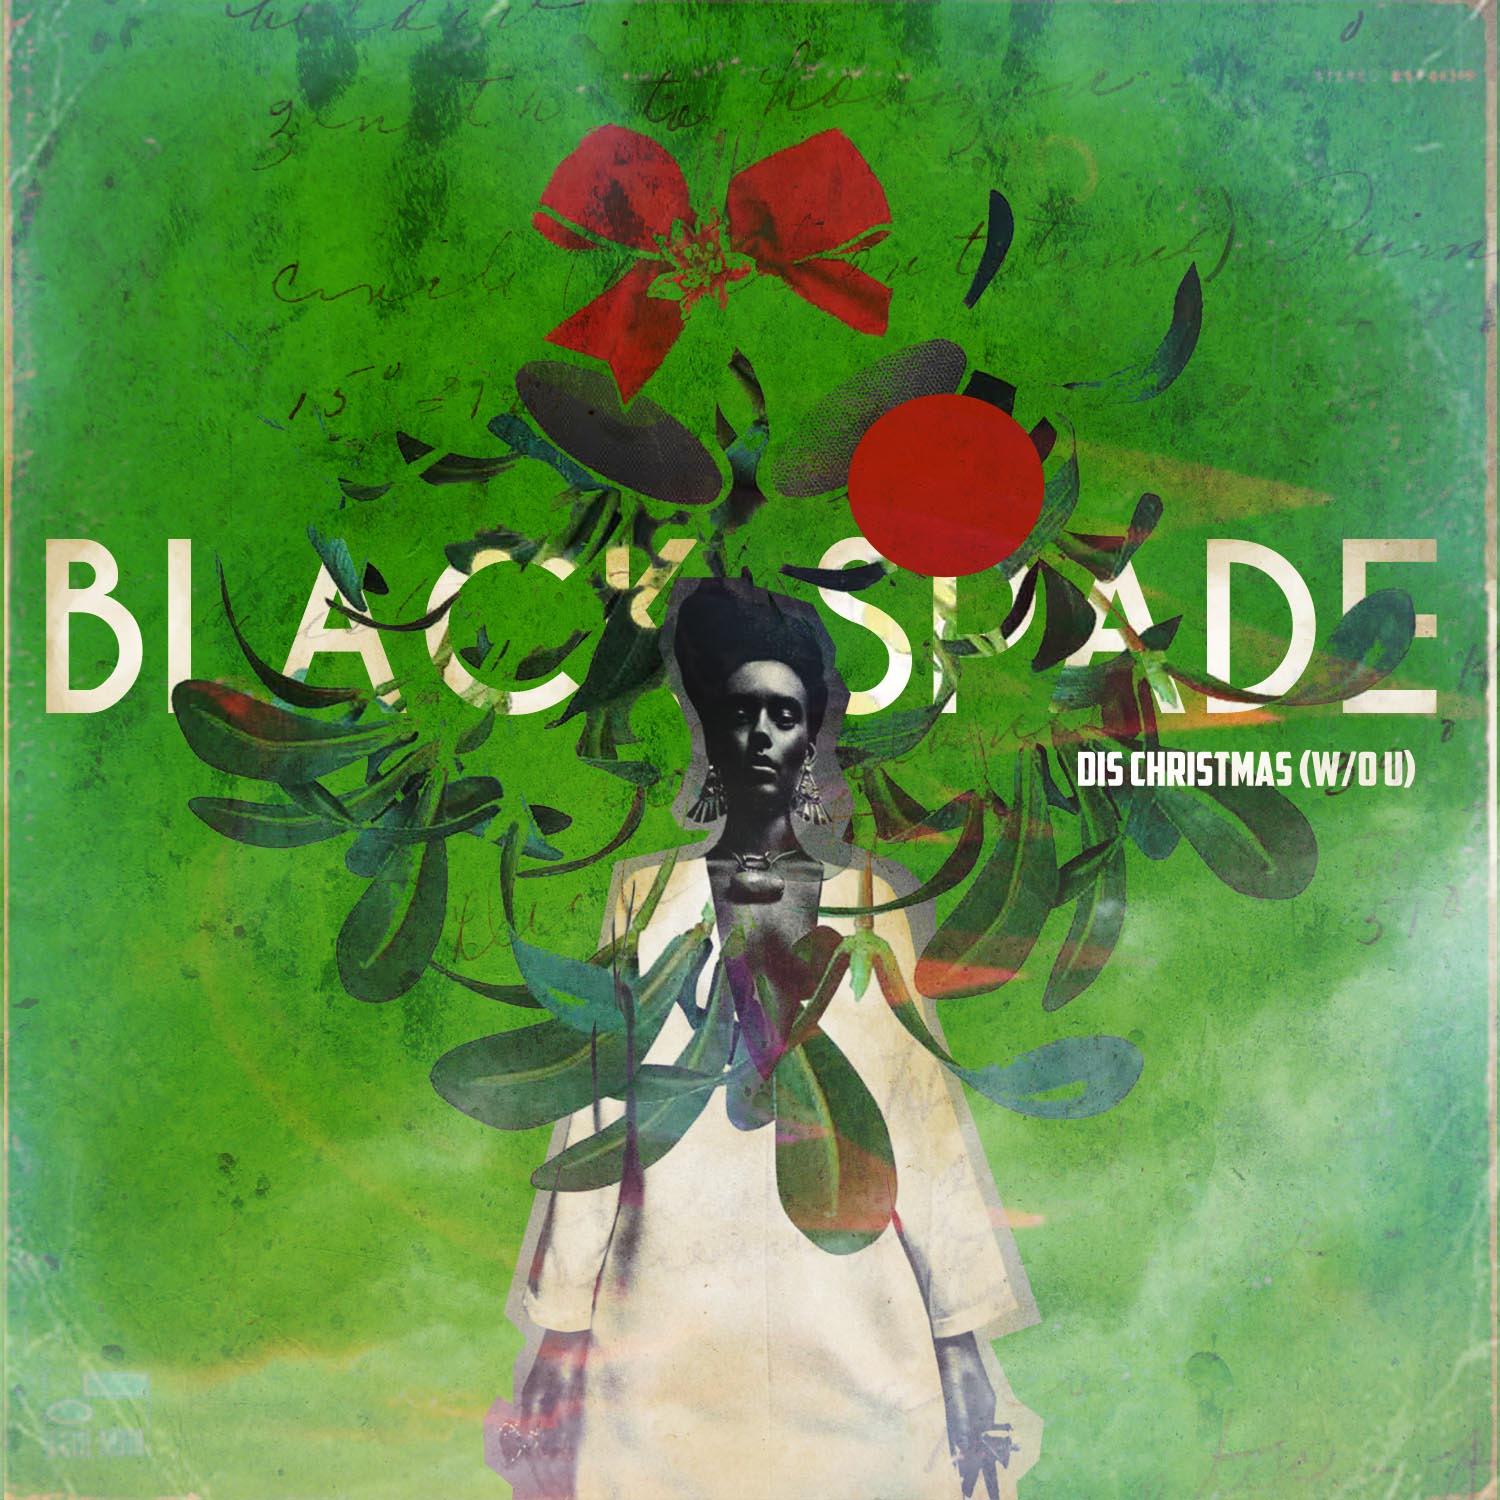 Black Spade “Dis Christmas (W/O U)” Free Single